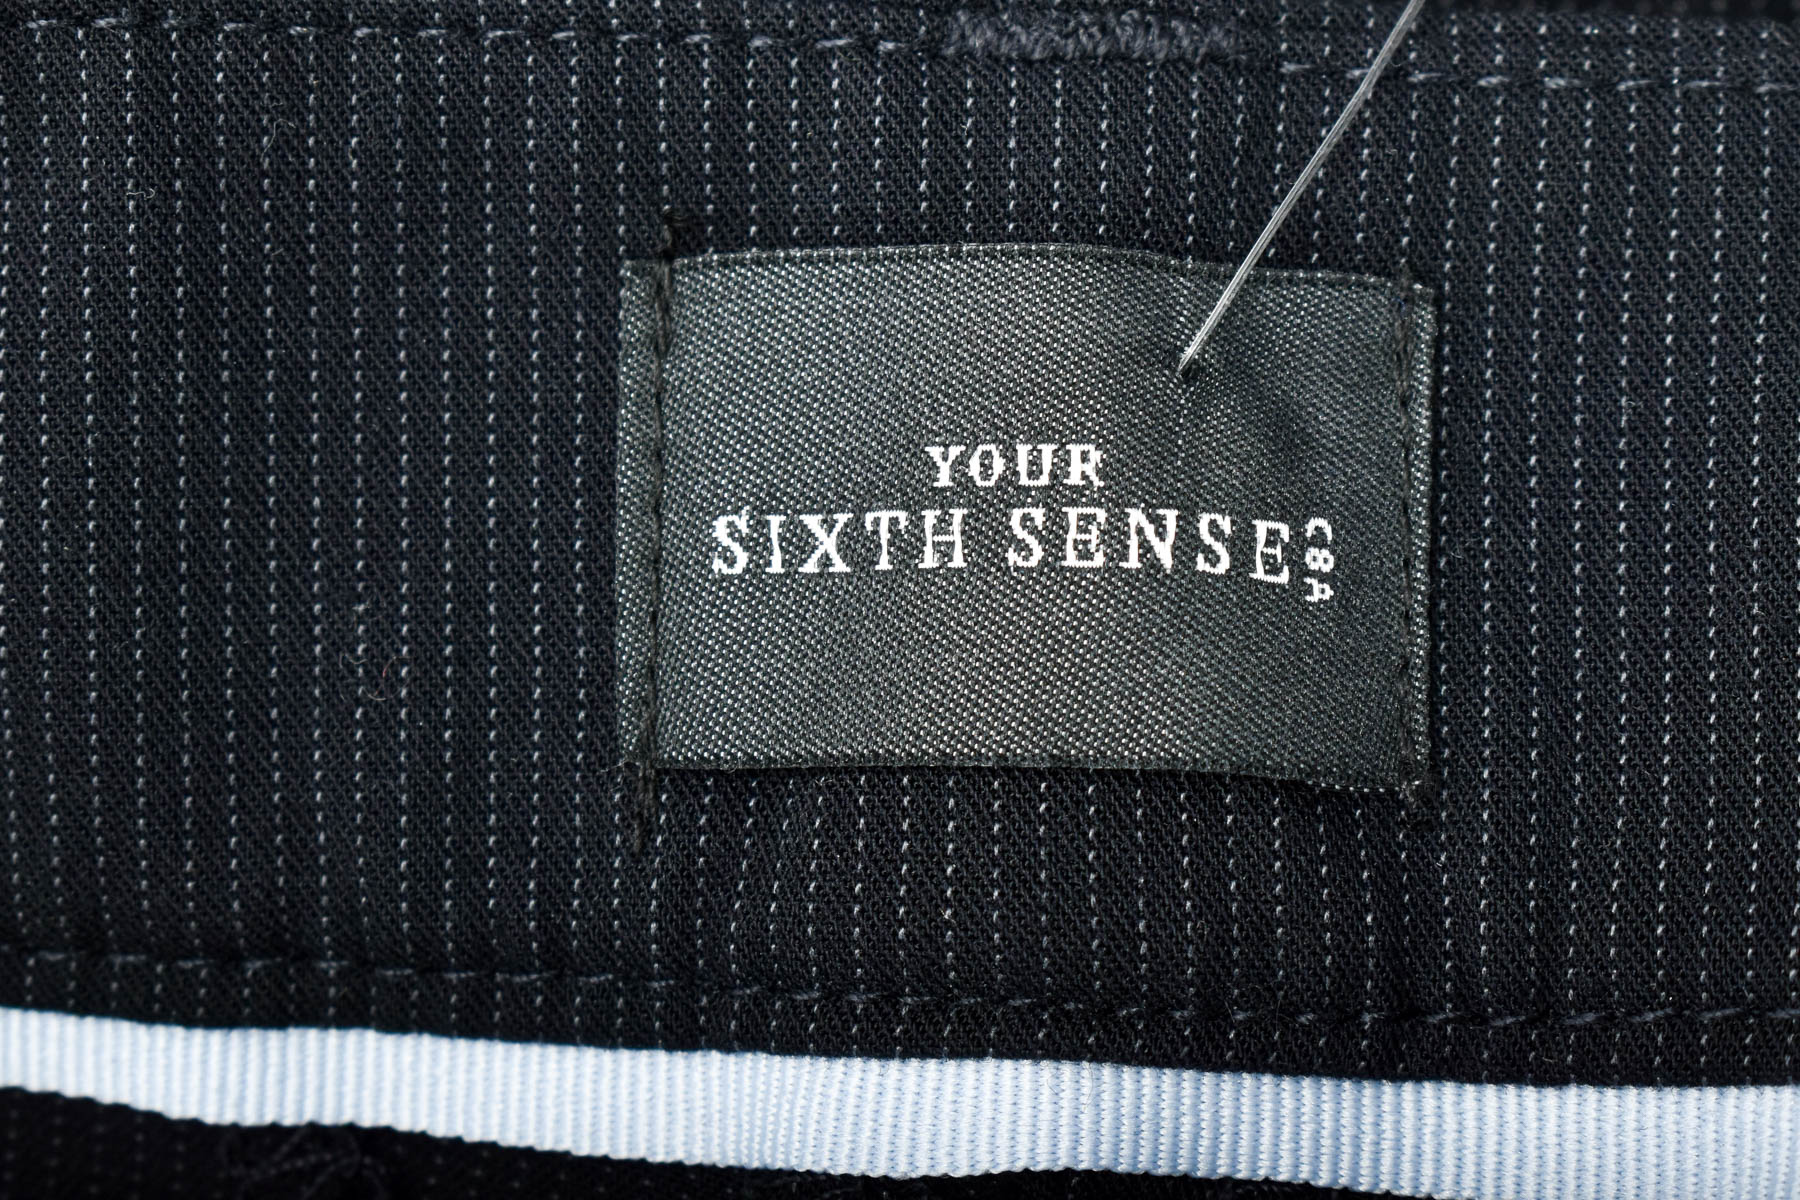 Дамски панталон - Your Sixth Sense - 2